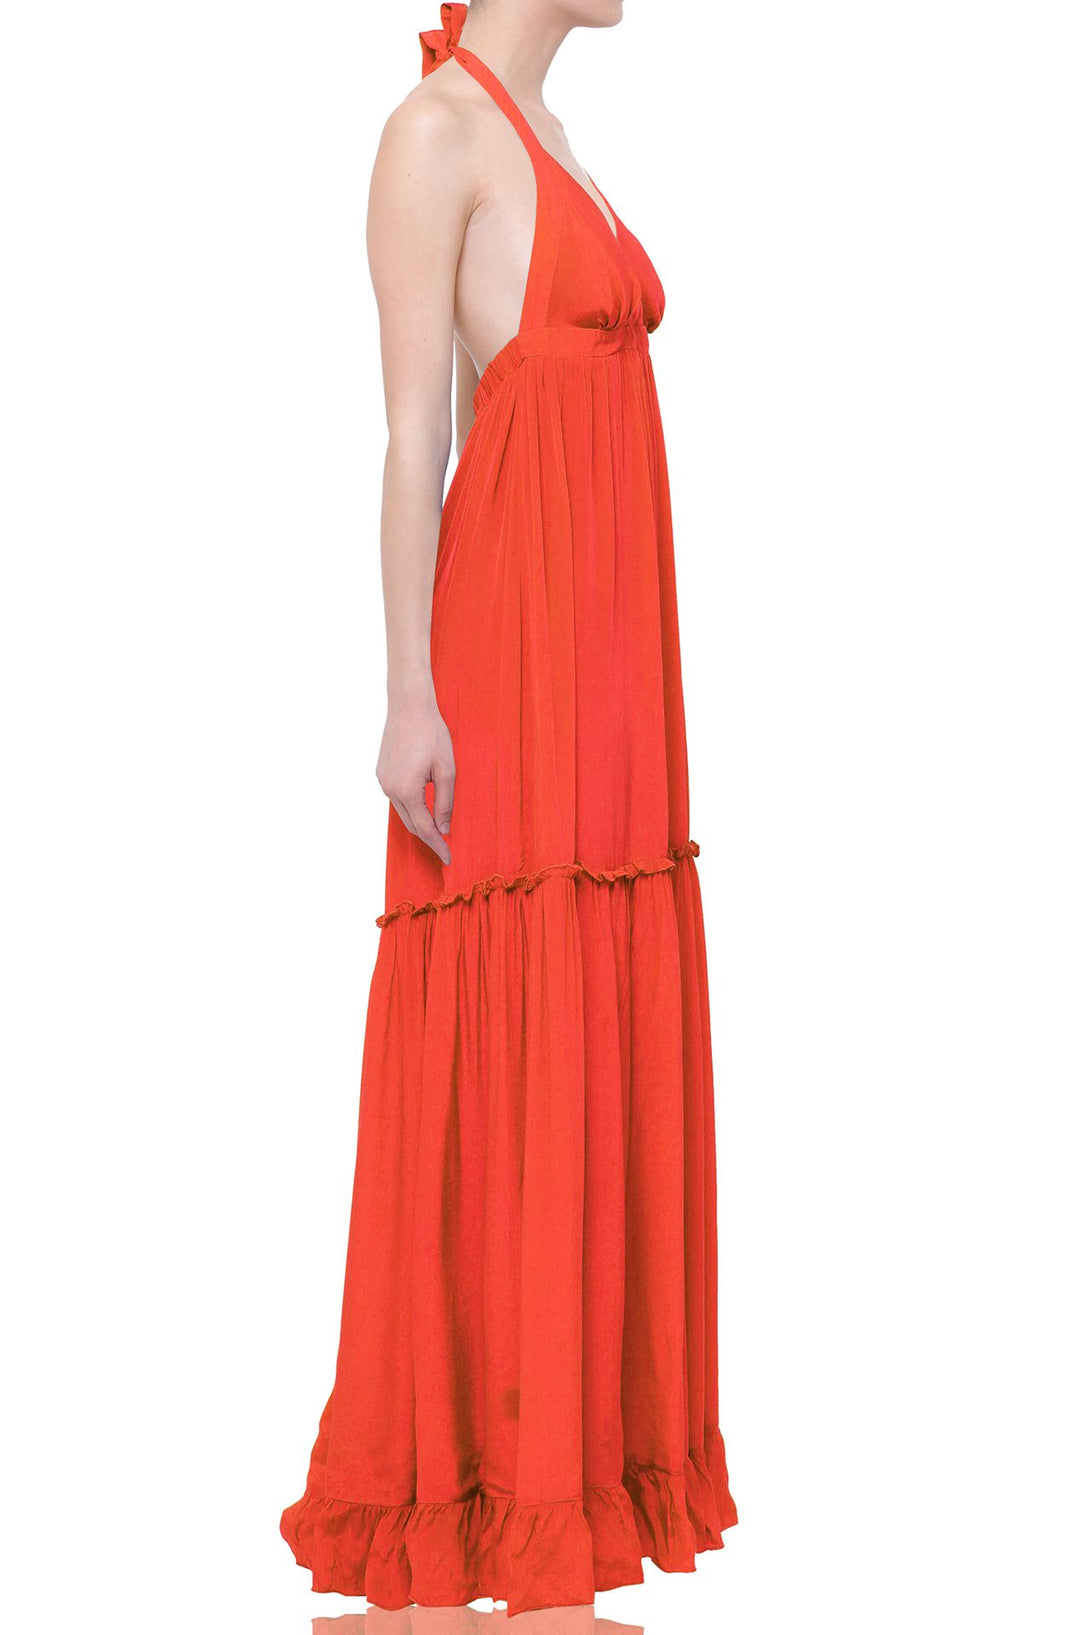  orange maxi dresses for women, summer maxi dresses for women, plunging v neck formal dress,